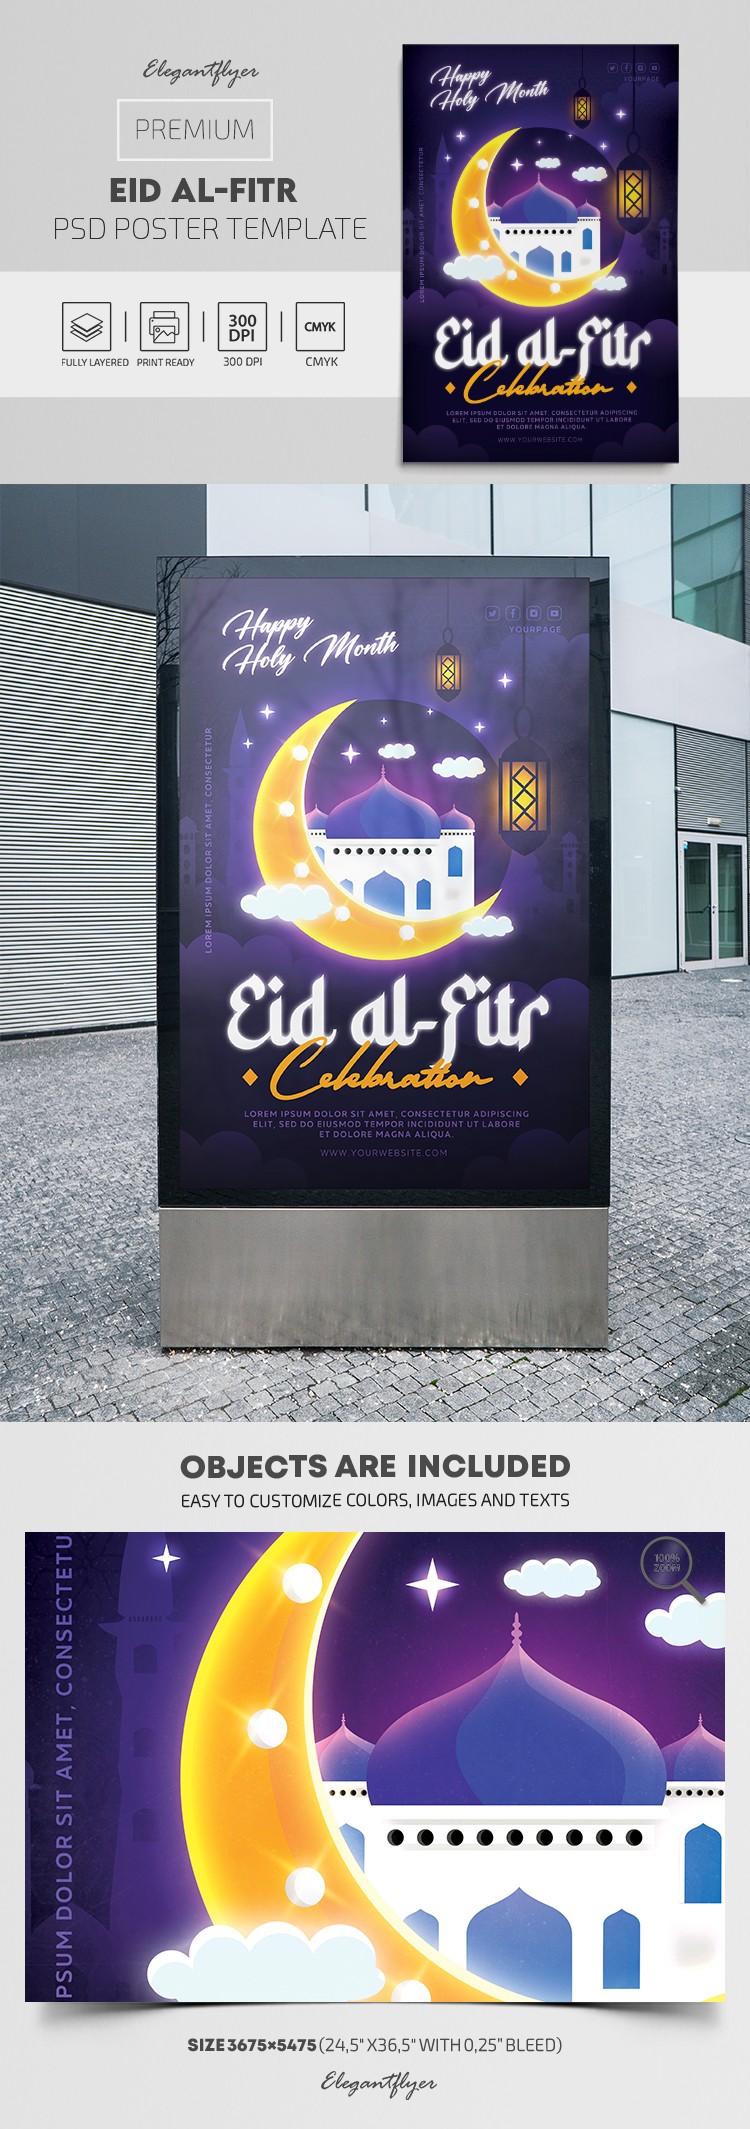 Cartaz do Eid al-Fitr by ElegantFlyer